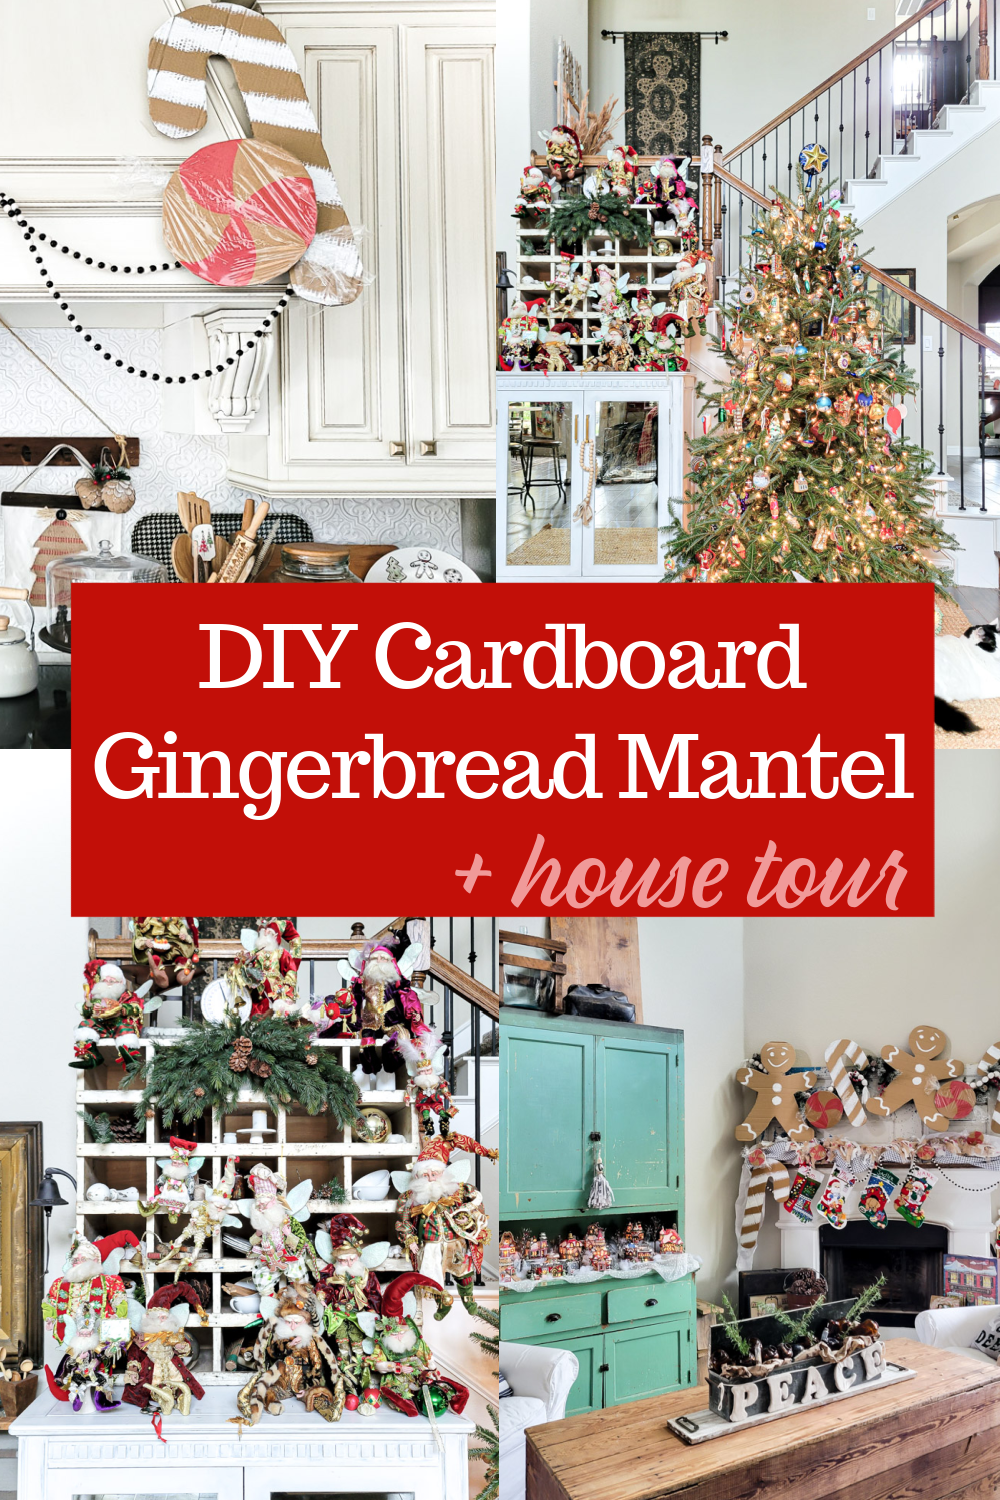 DIY Cardboard Gingerbread Playhouse for Christmas | HGTV